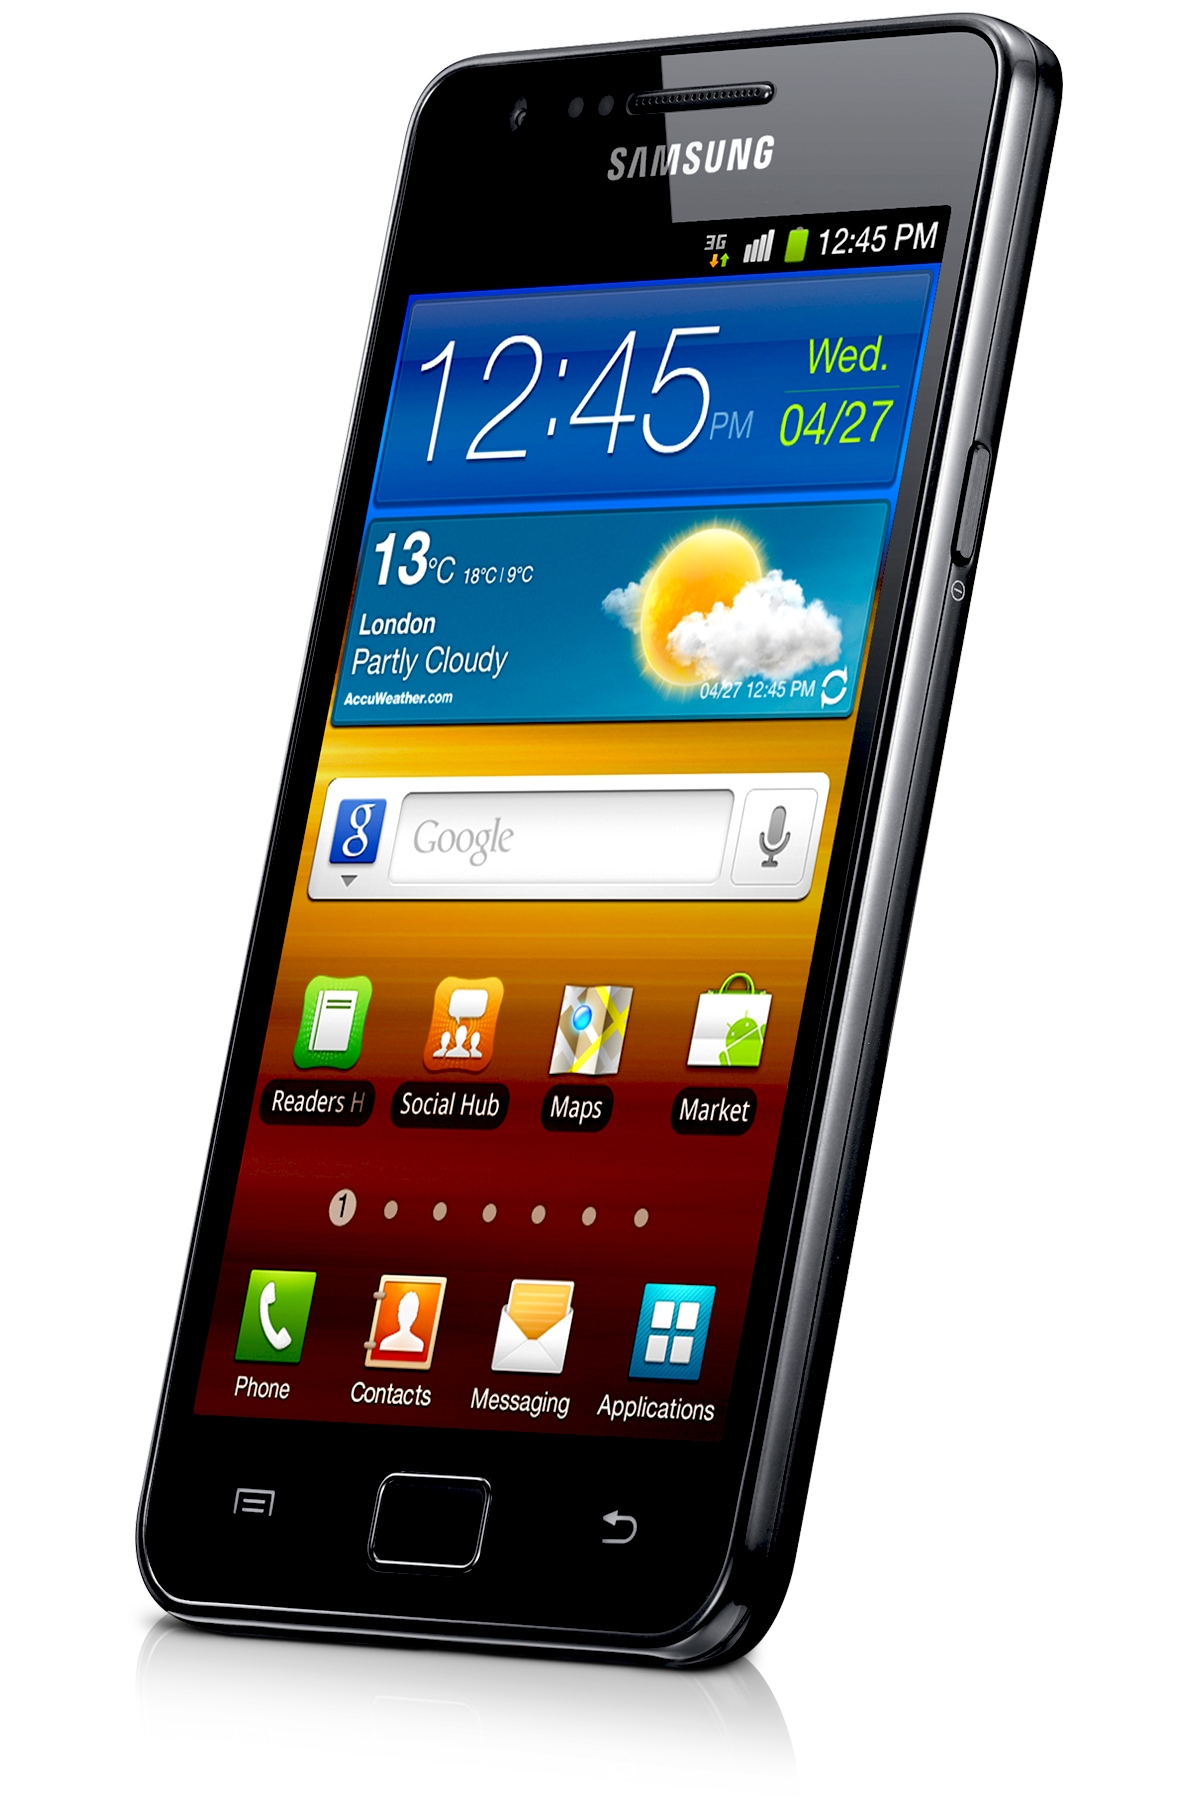 Samsung Galaxy S2 Smartphone | 5.5” Display | Features | Black